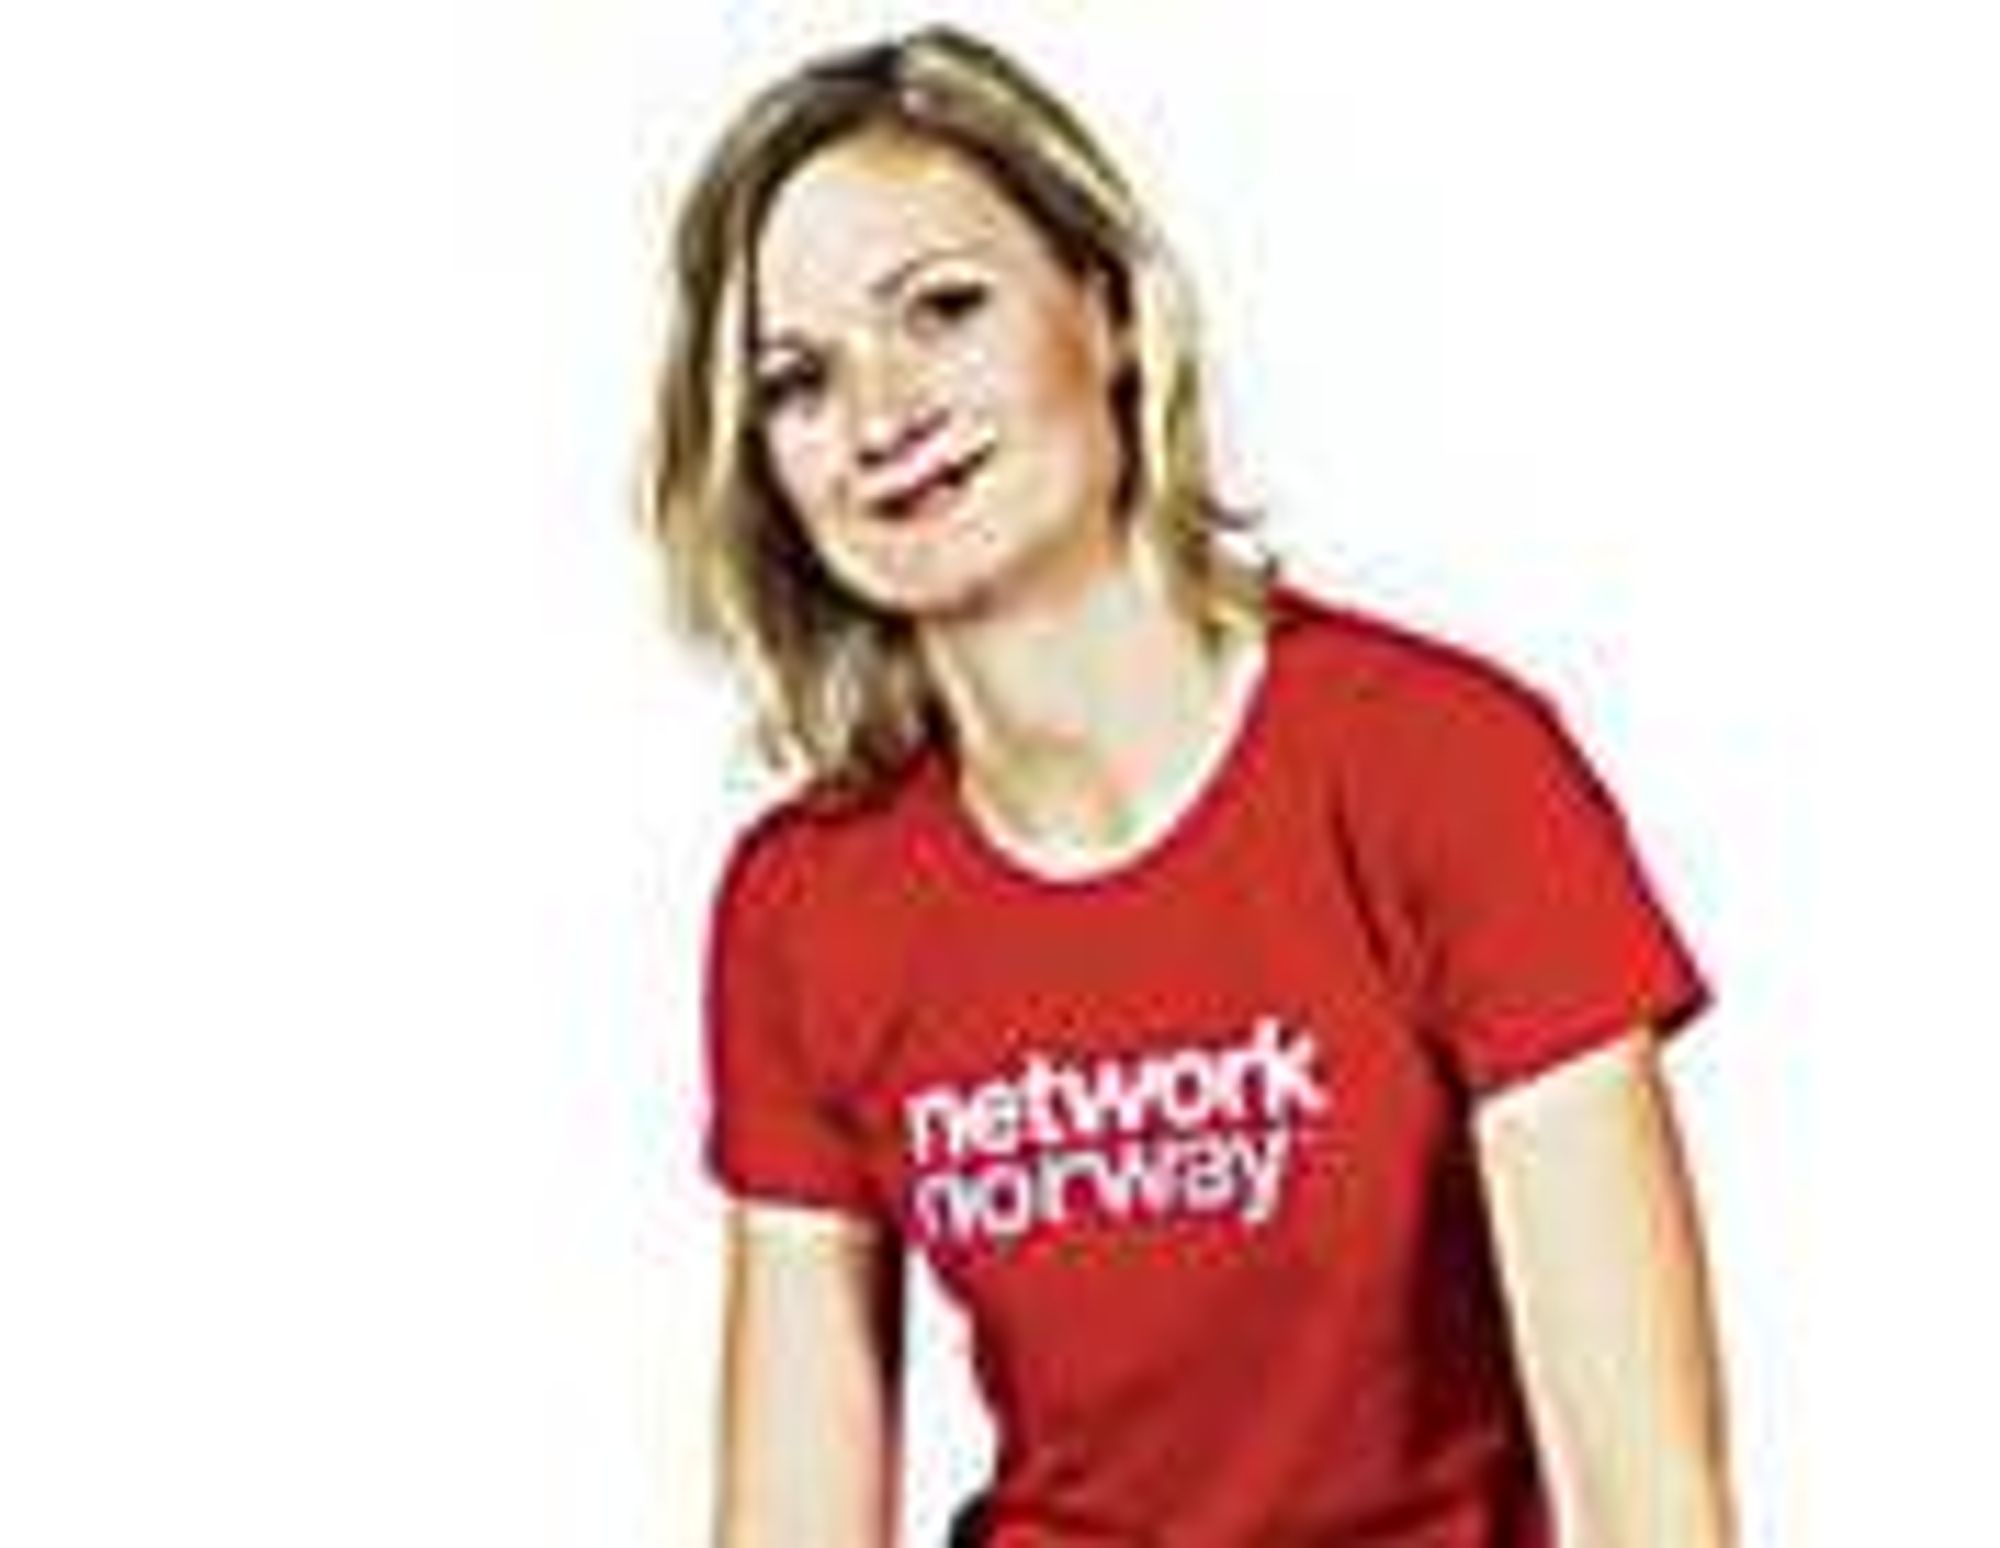 Call Norwegian til Network Norway